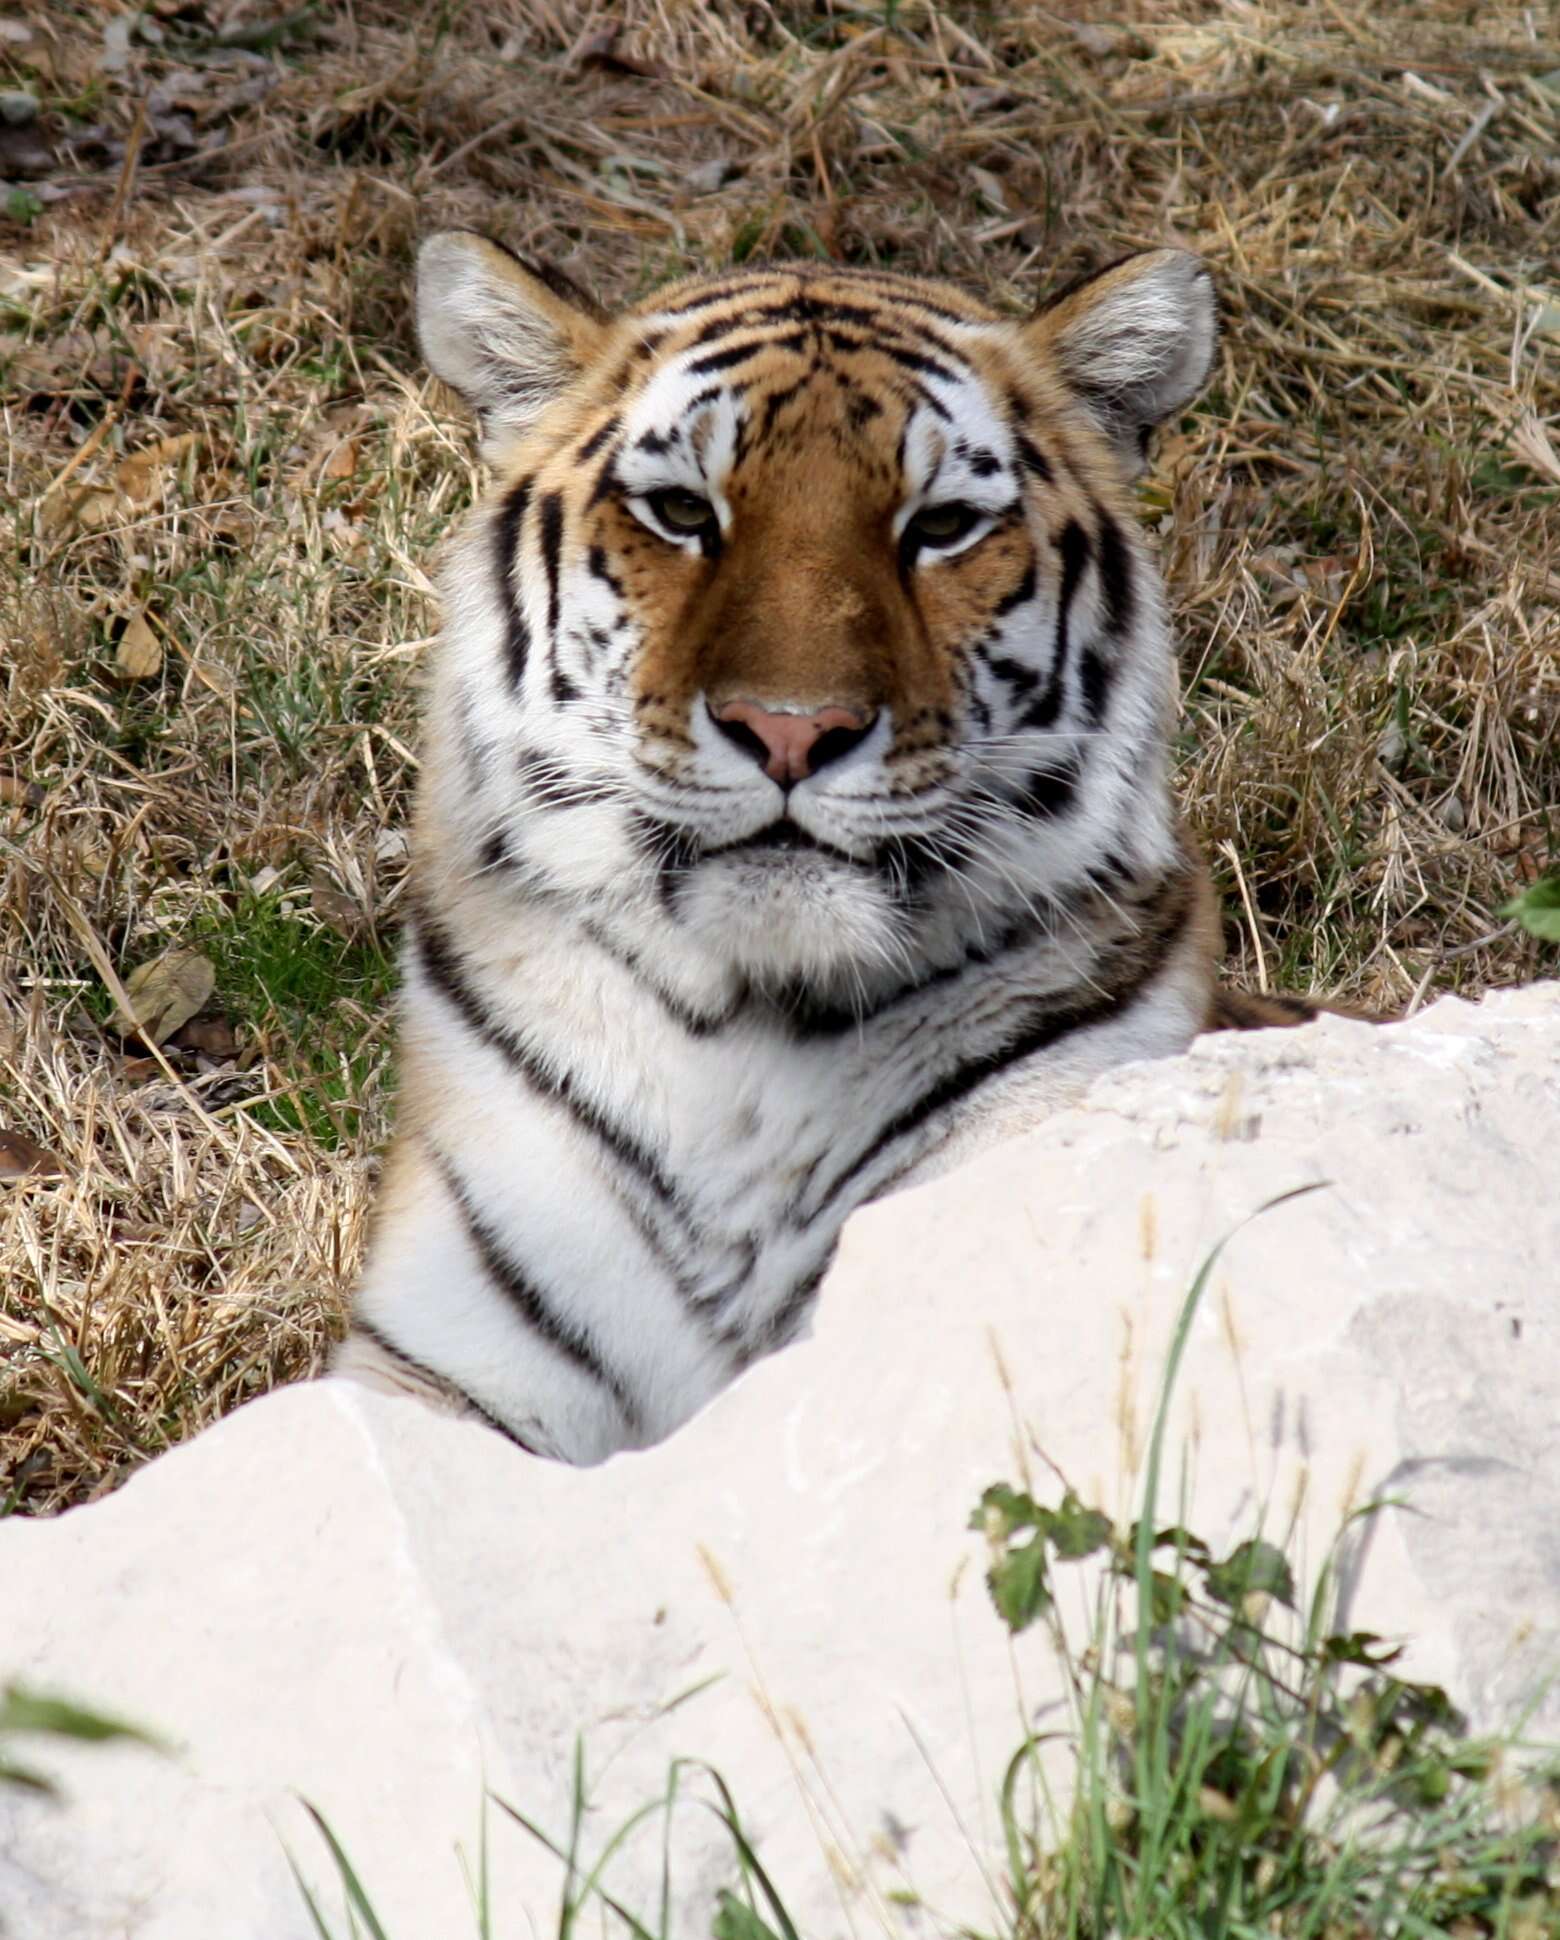 Image of Amur Tiger